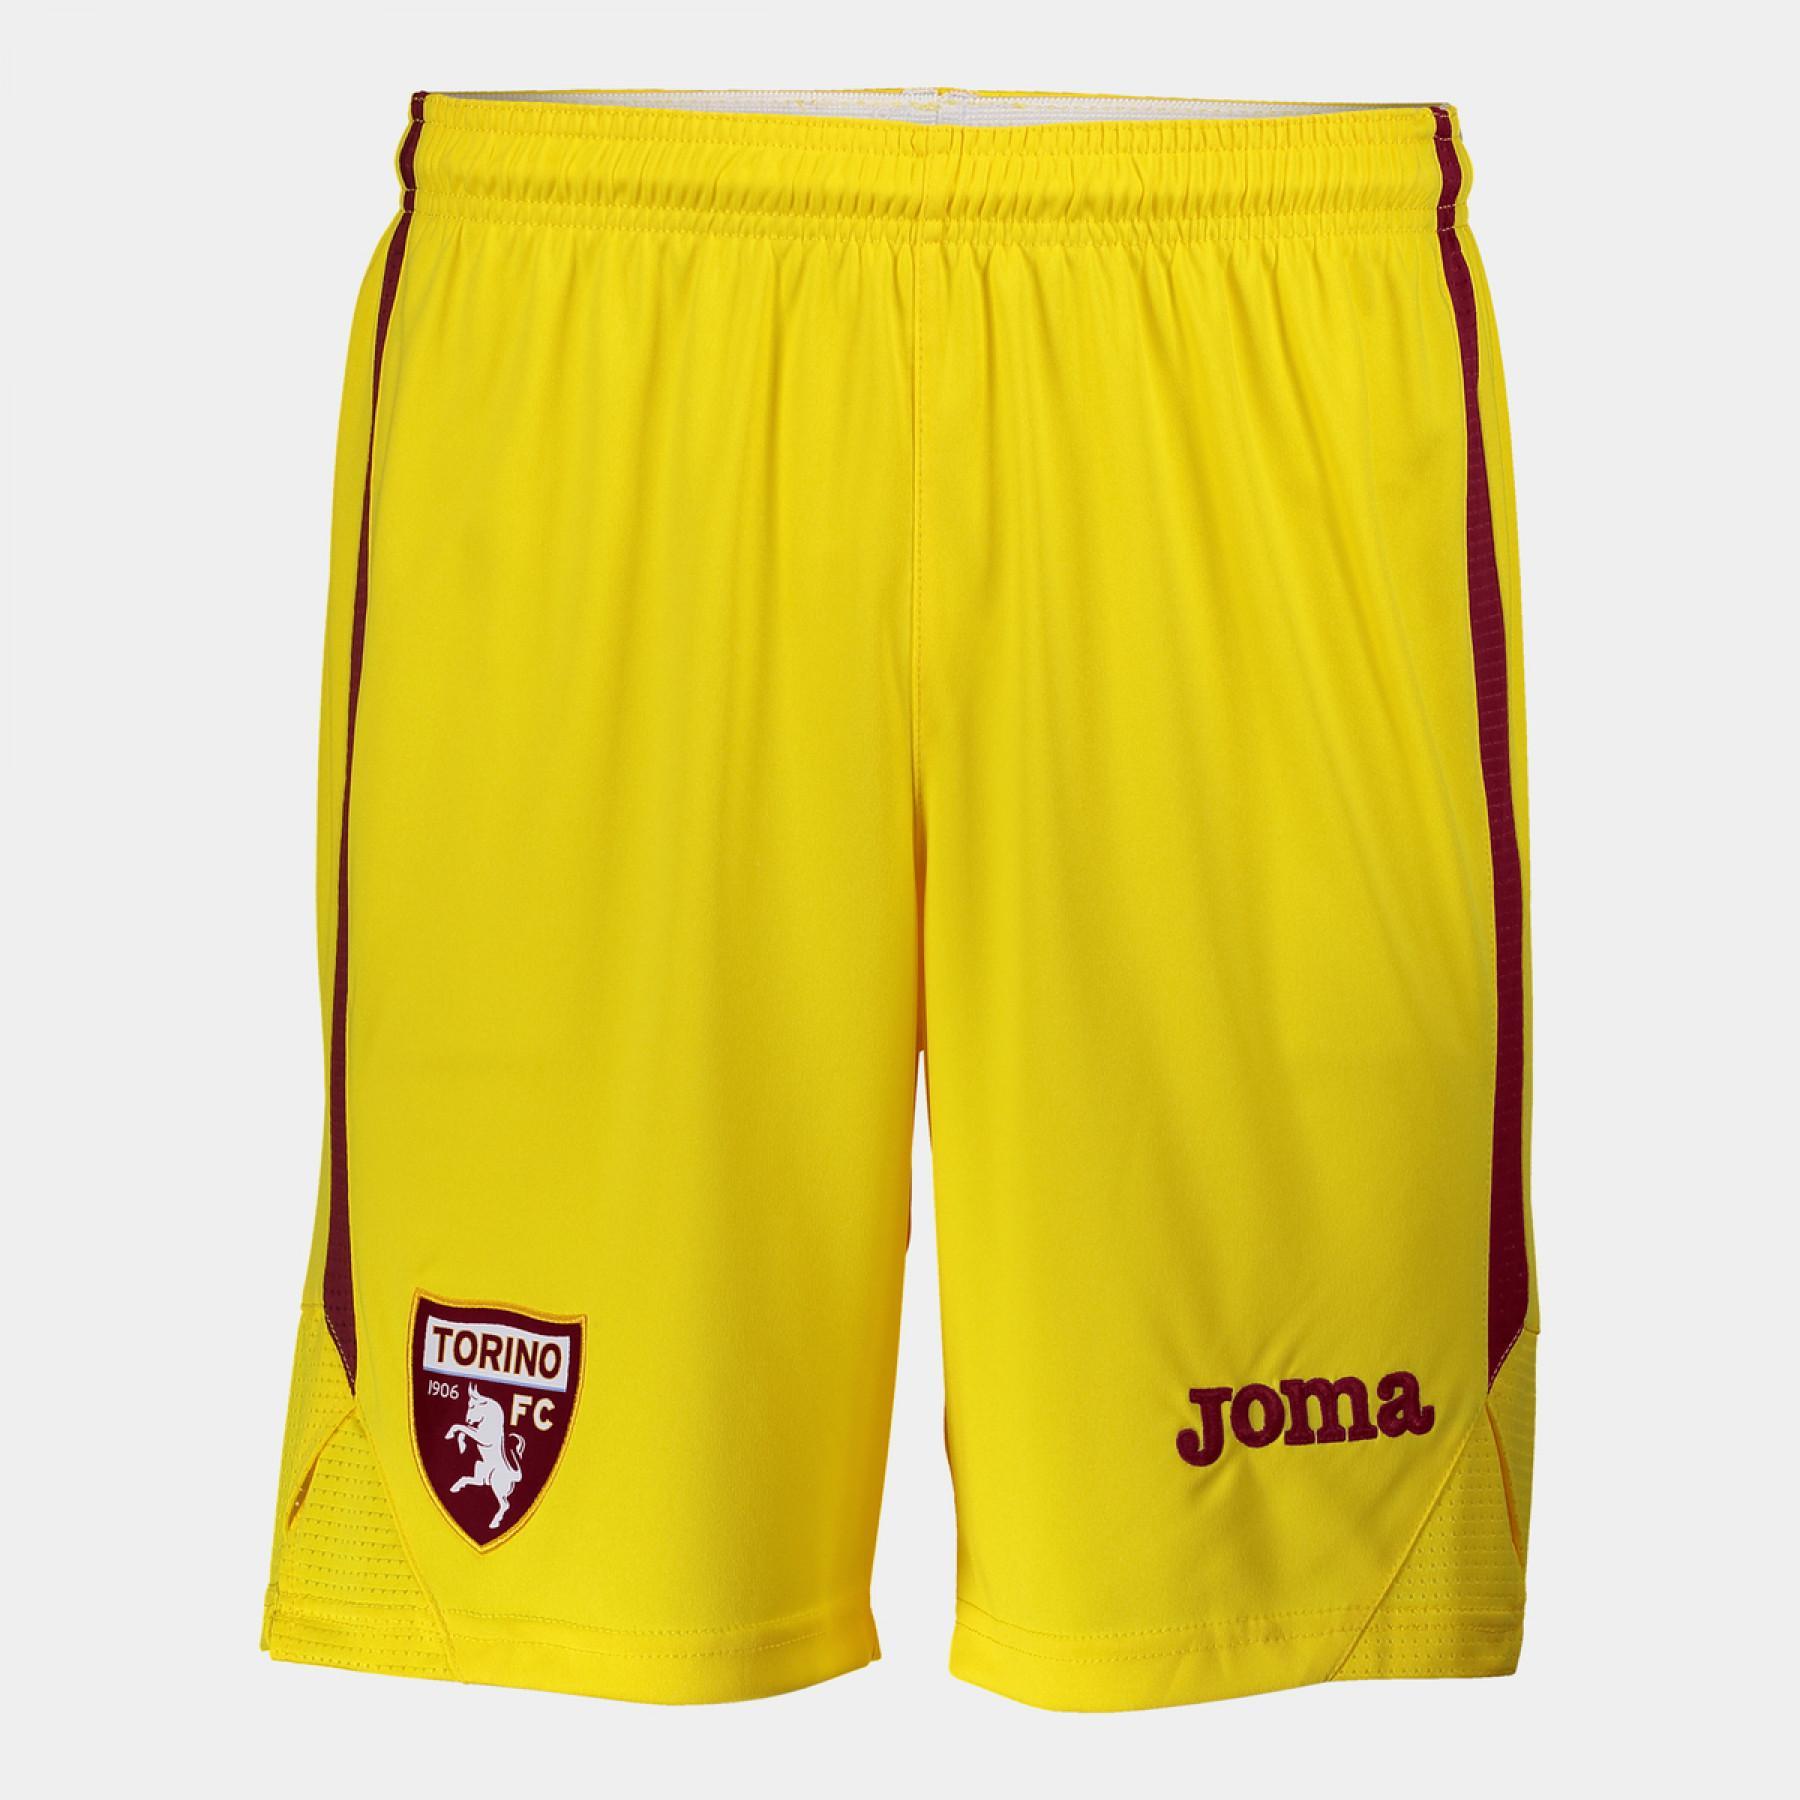 Home guard shorts Torino FC 2020/21